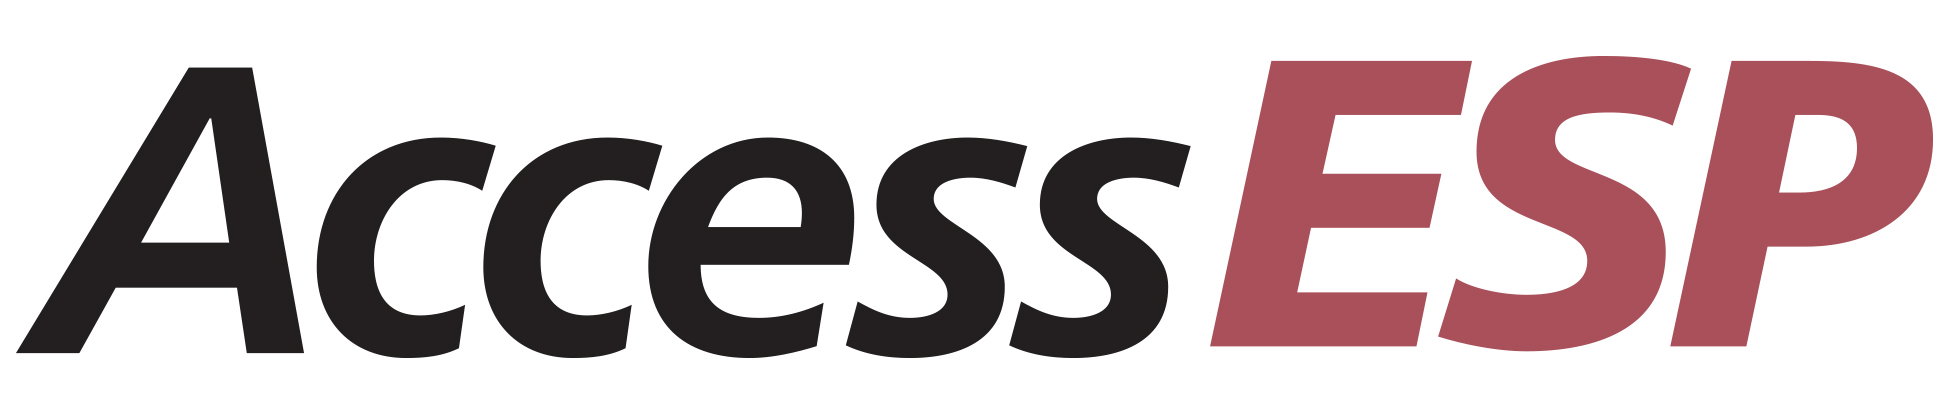 4AccessESP logo